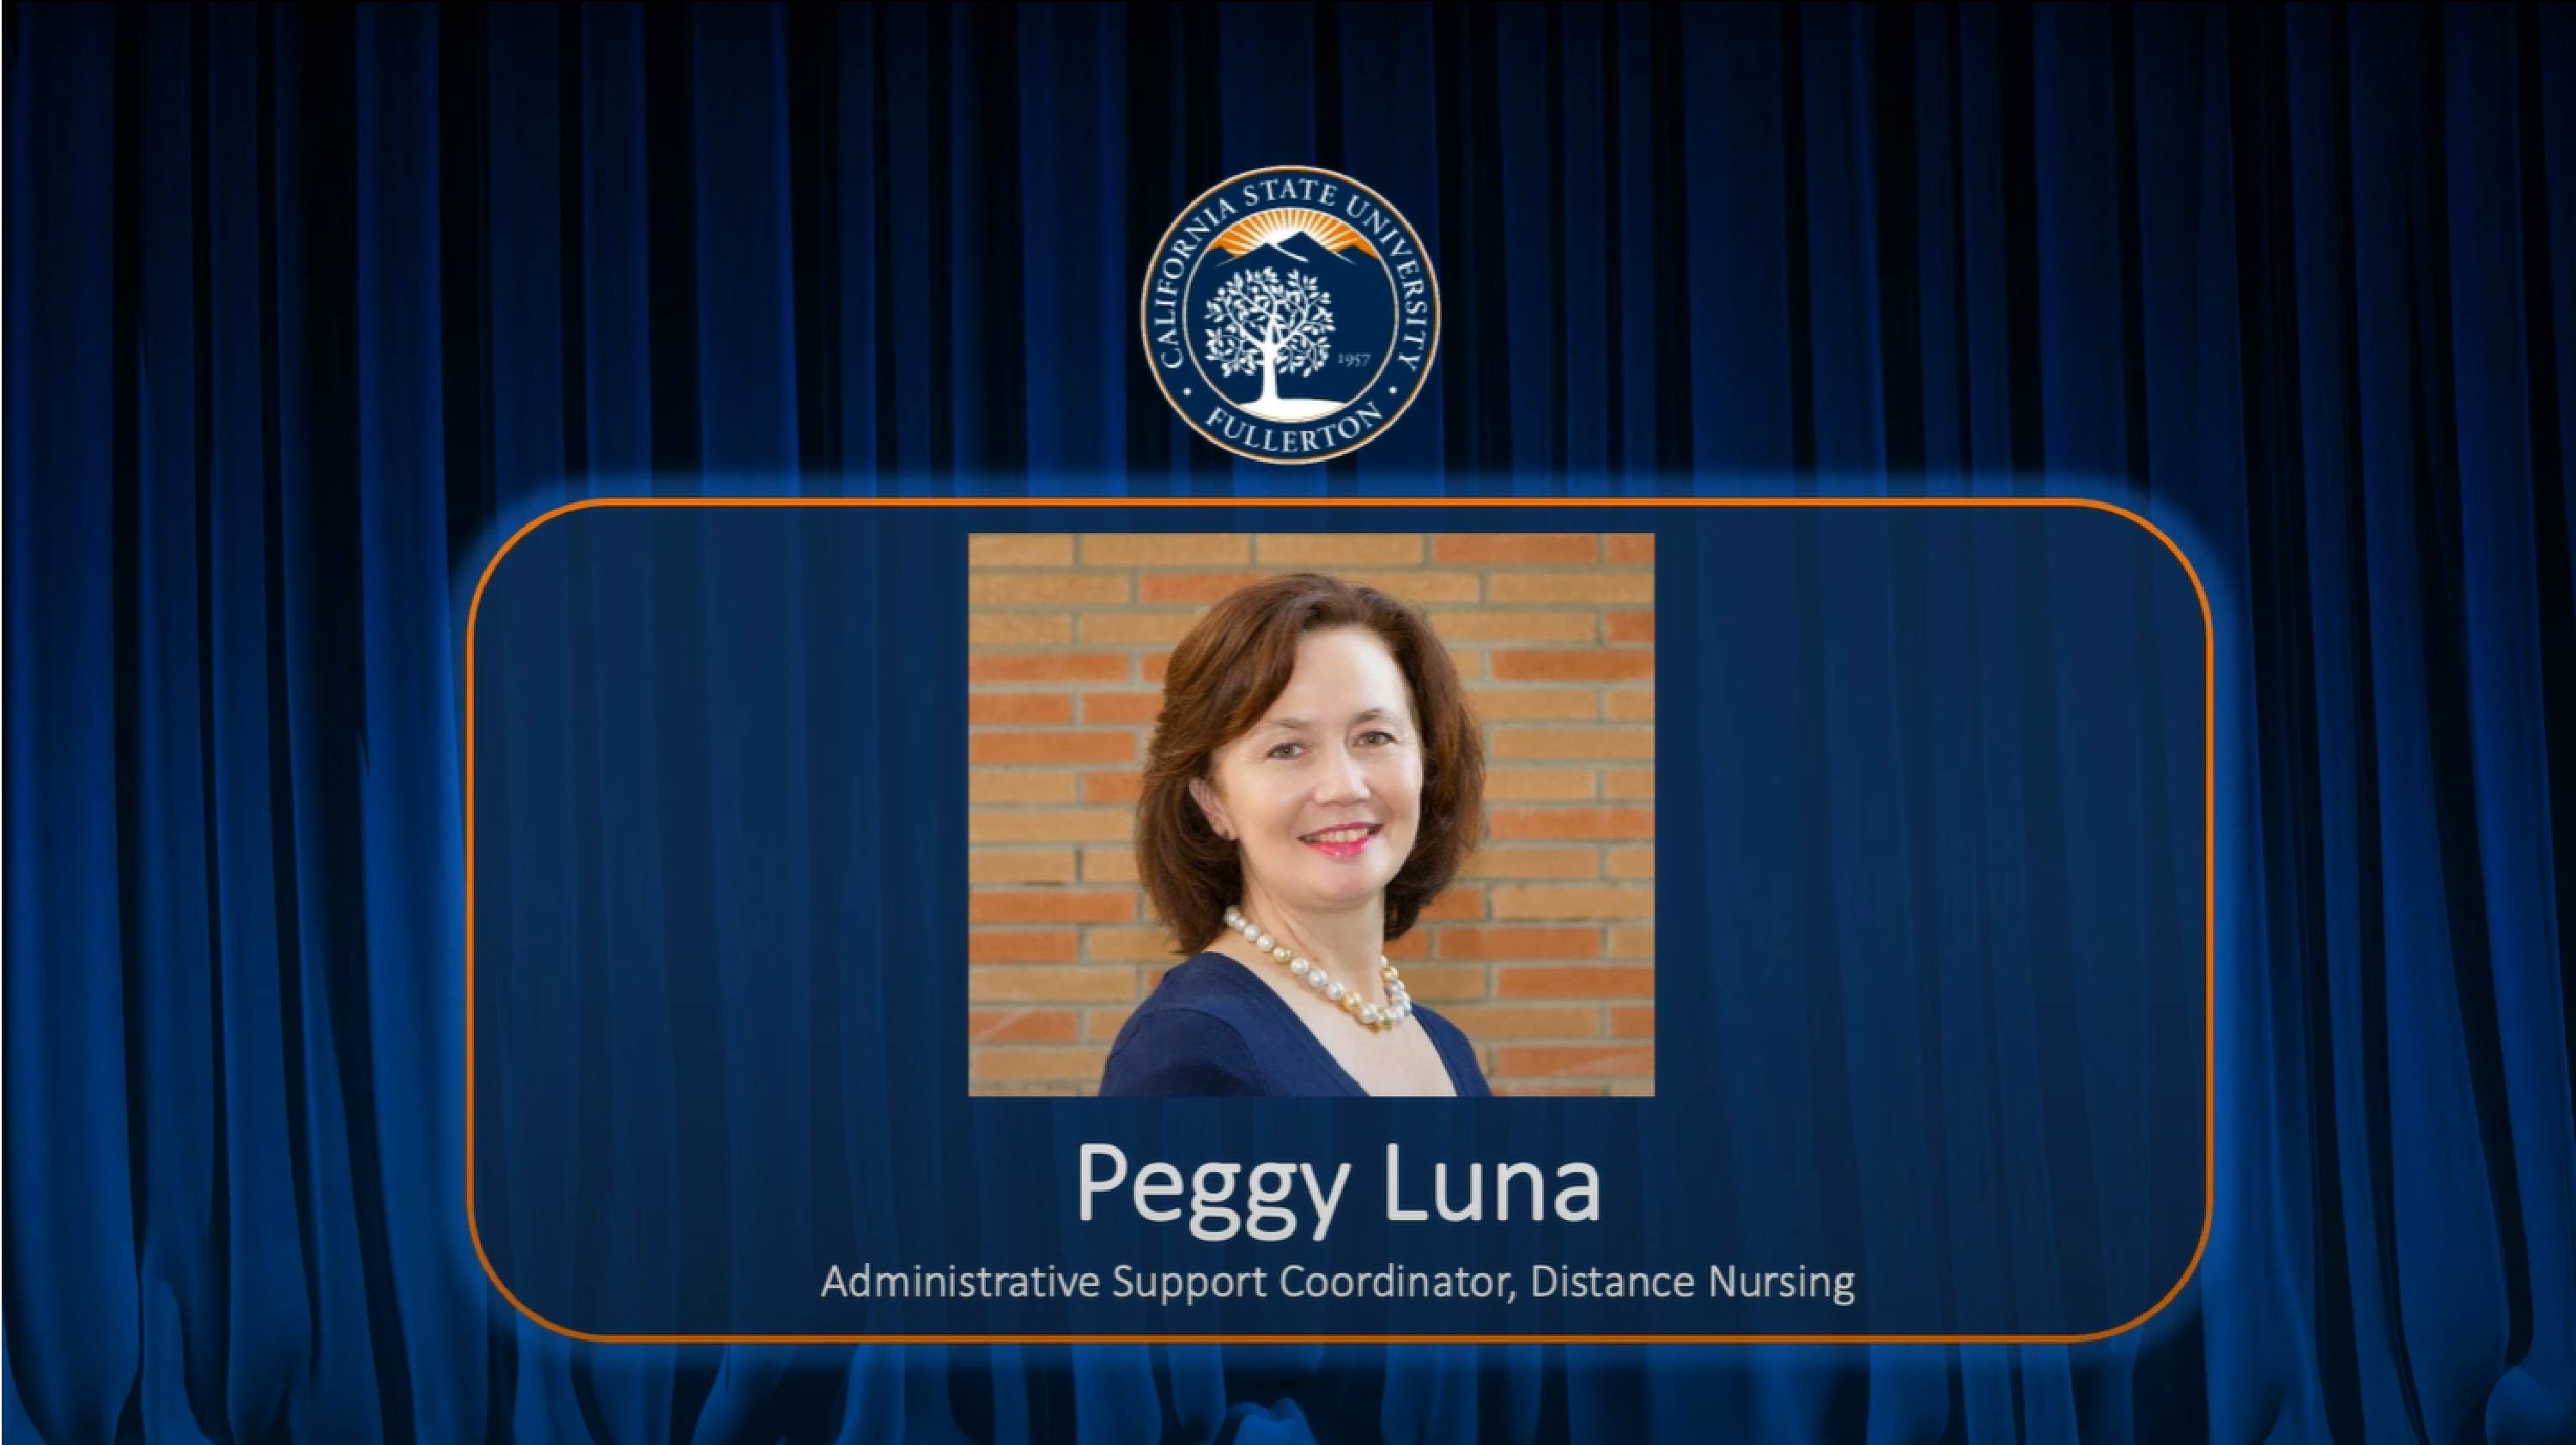 Congratulations Peggy Luna